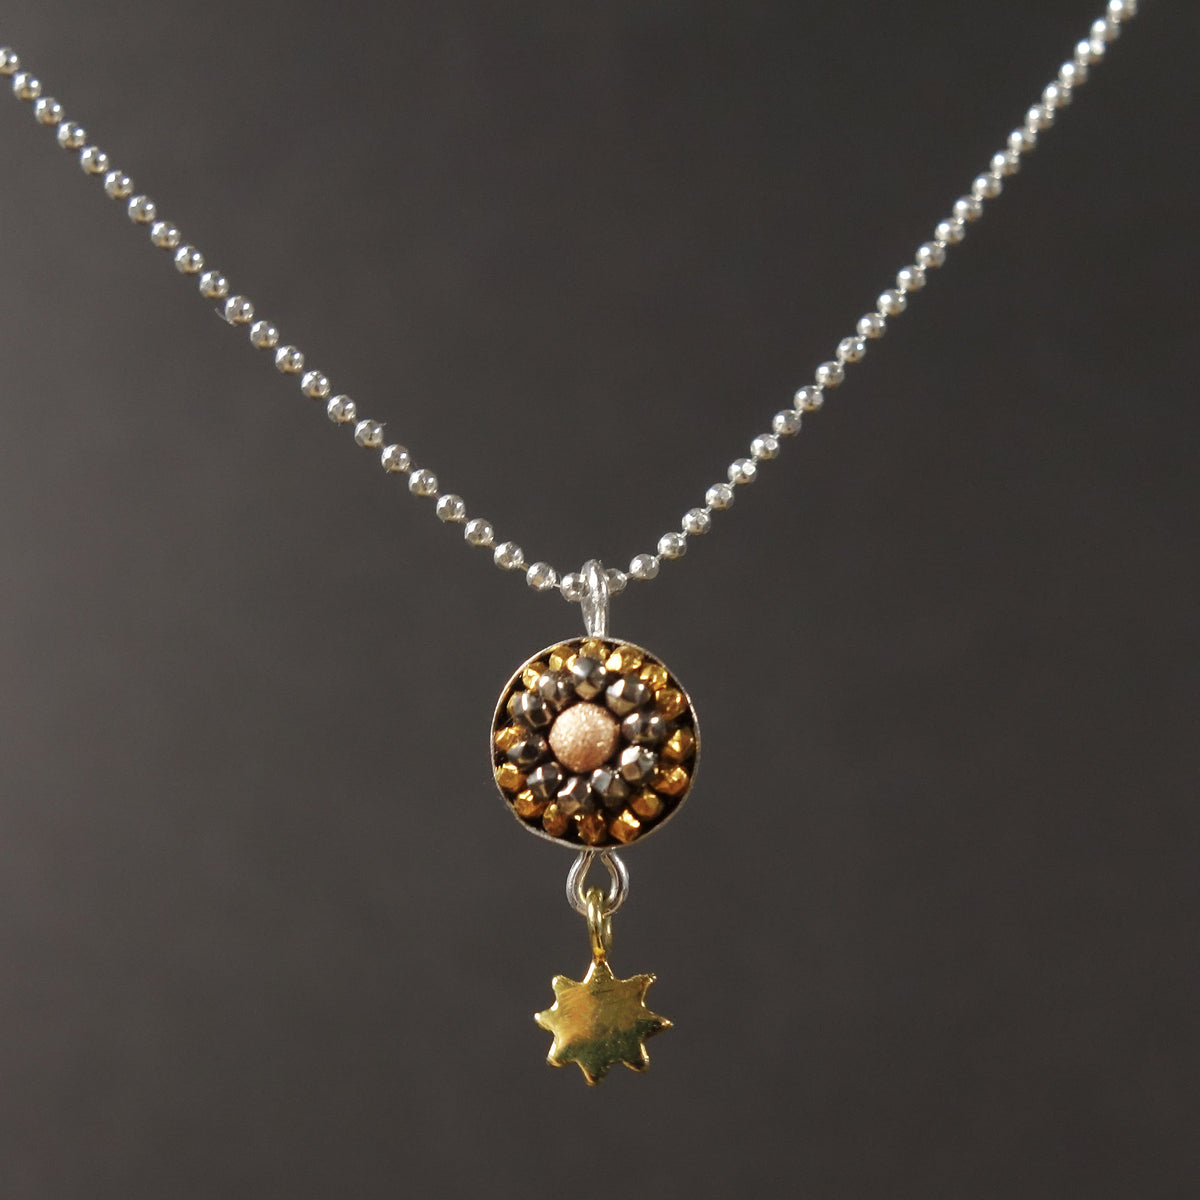 The Sun Also Rises: tiny mosaic/sun pendant necklace